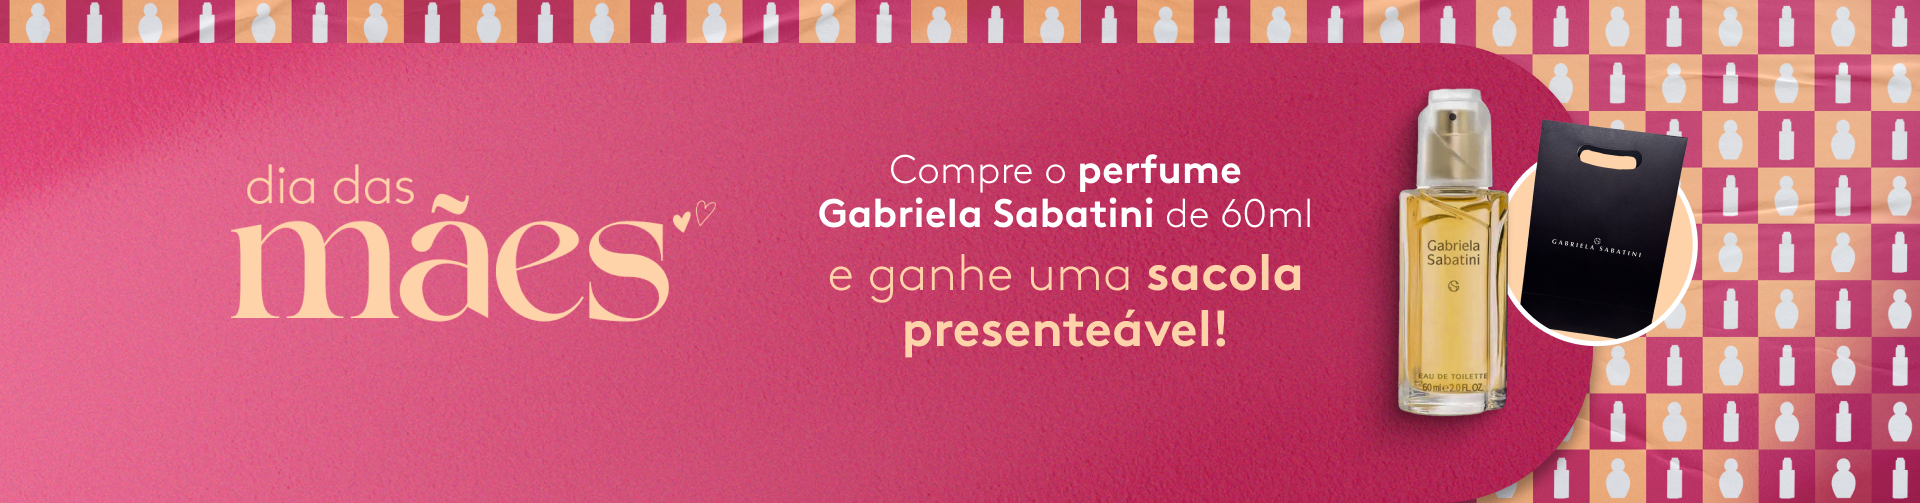 Gabriela Sabatini 60ml